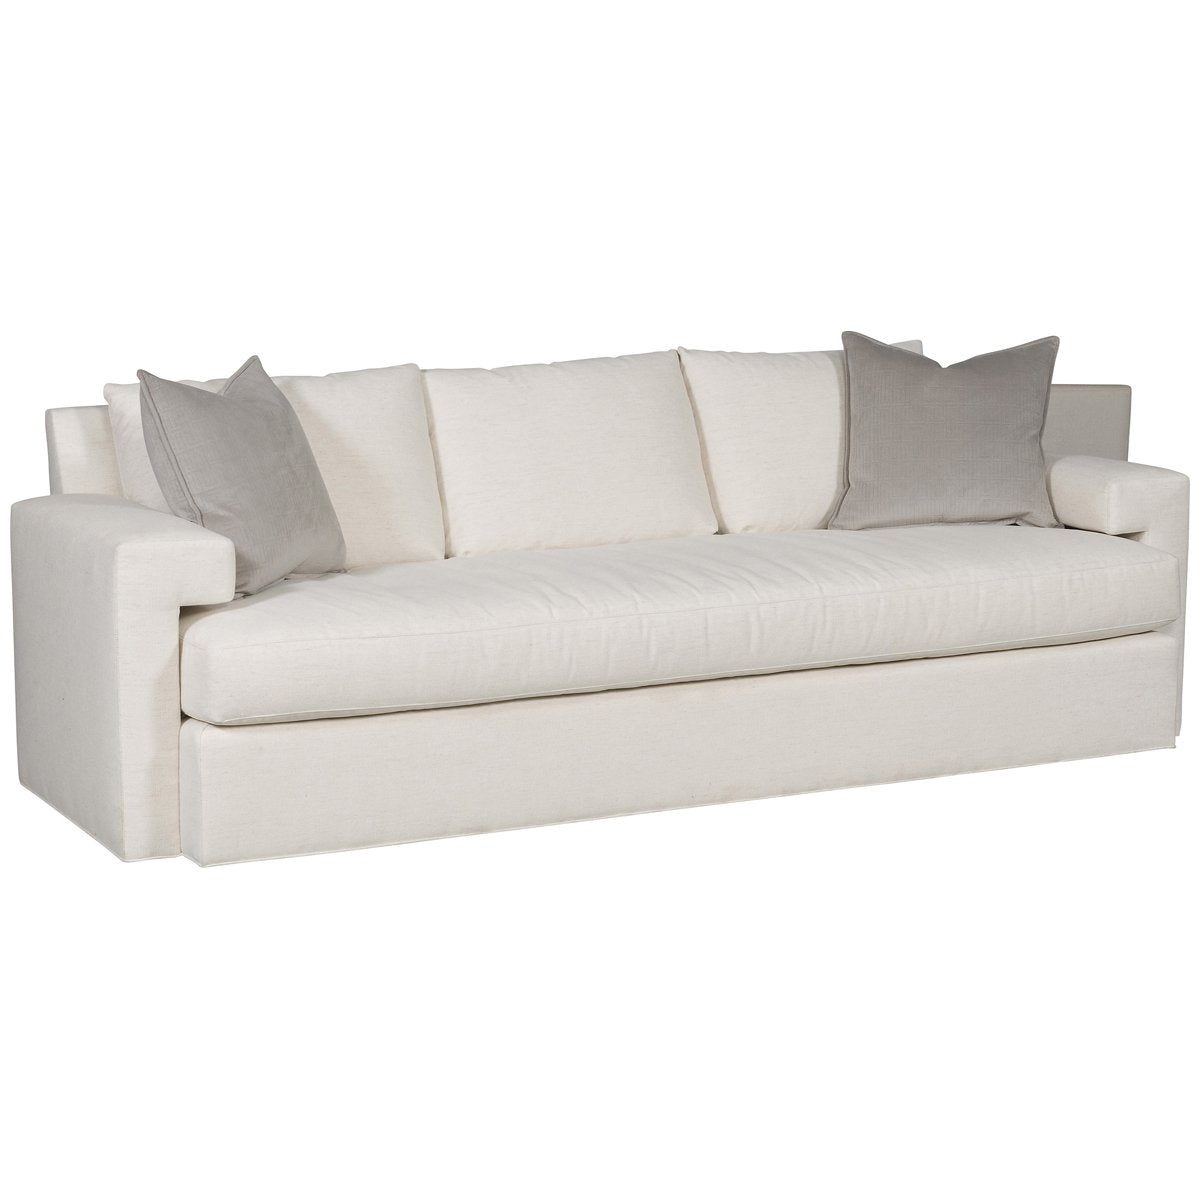 Vanguard Furniture Ferriday Bench Seat Sofa